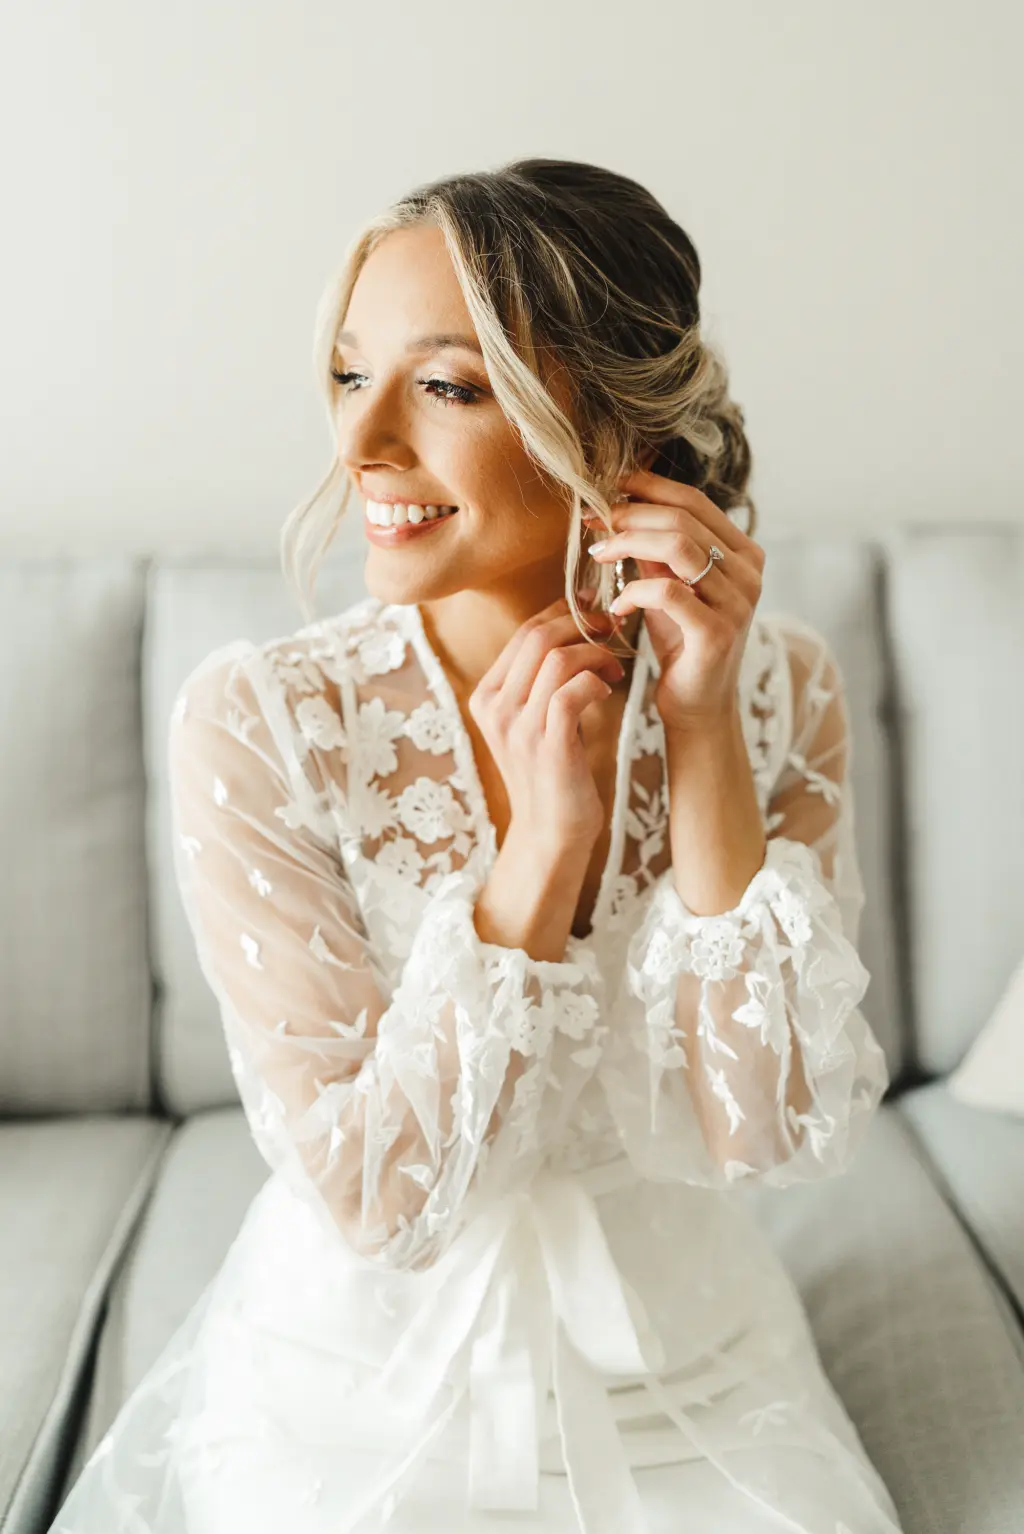 Bride Getting Ready Wedding Portrait | Tampa Bay Hair and Makeup Artist Femme Akoi Beauty Studio | Photographer J&S Media